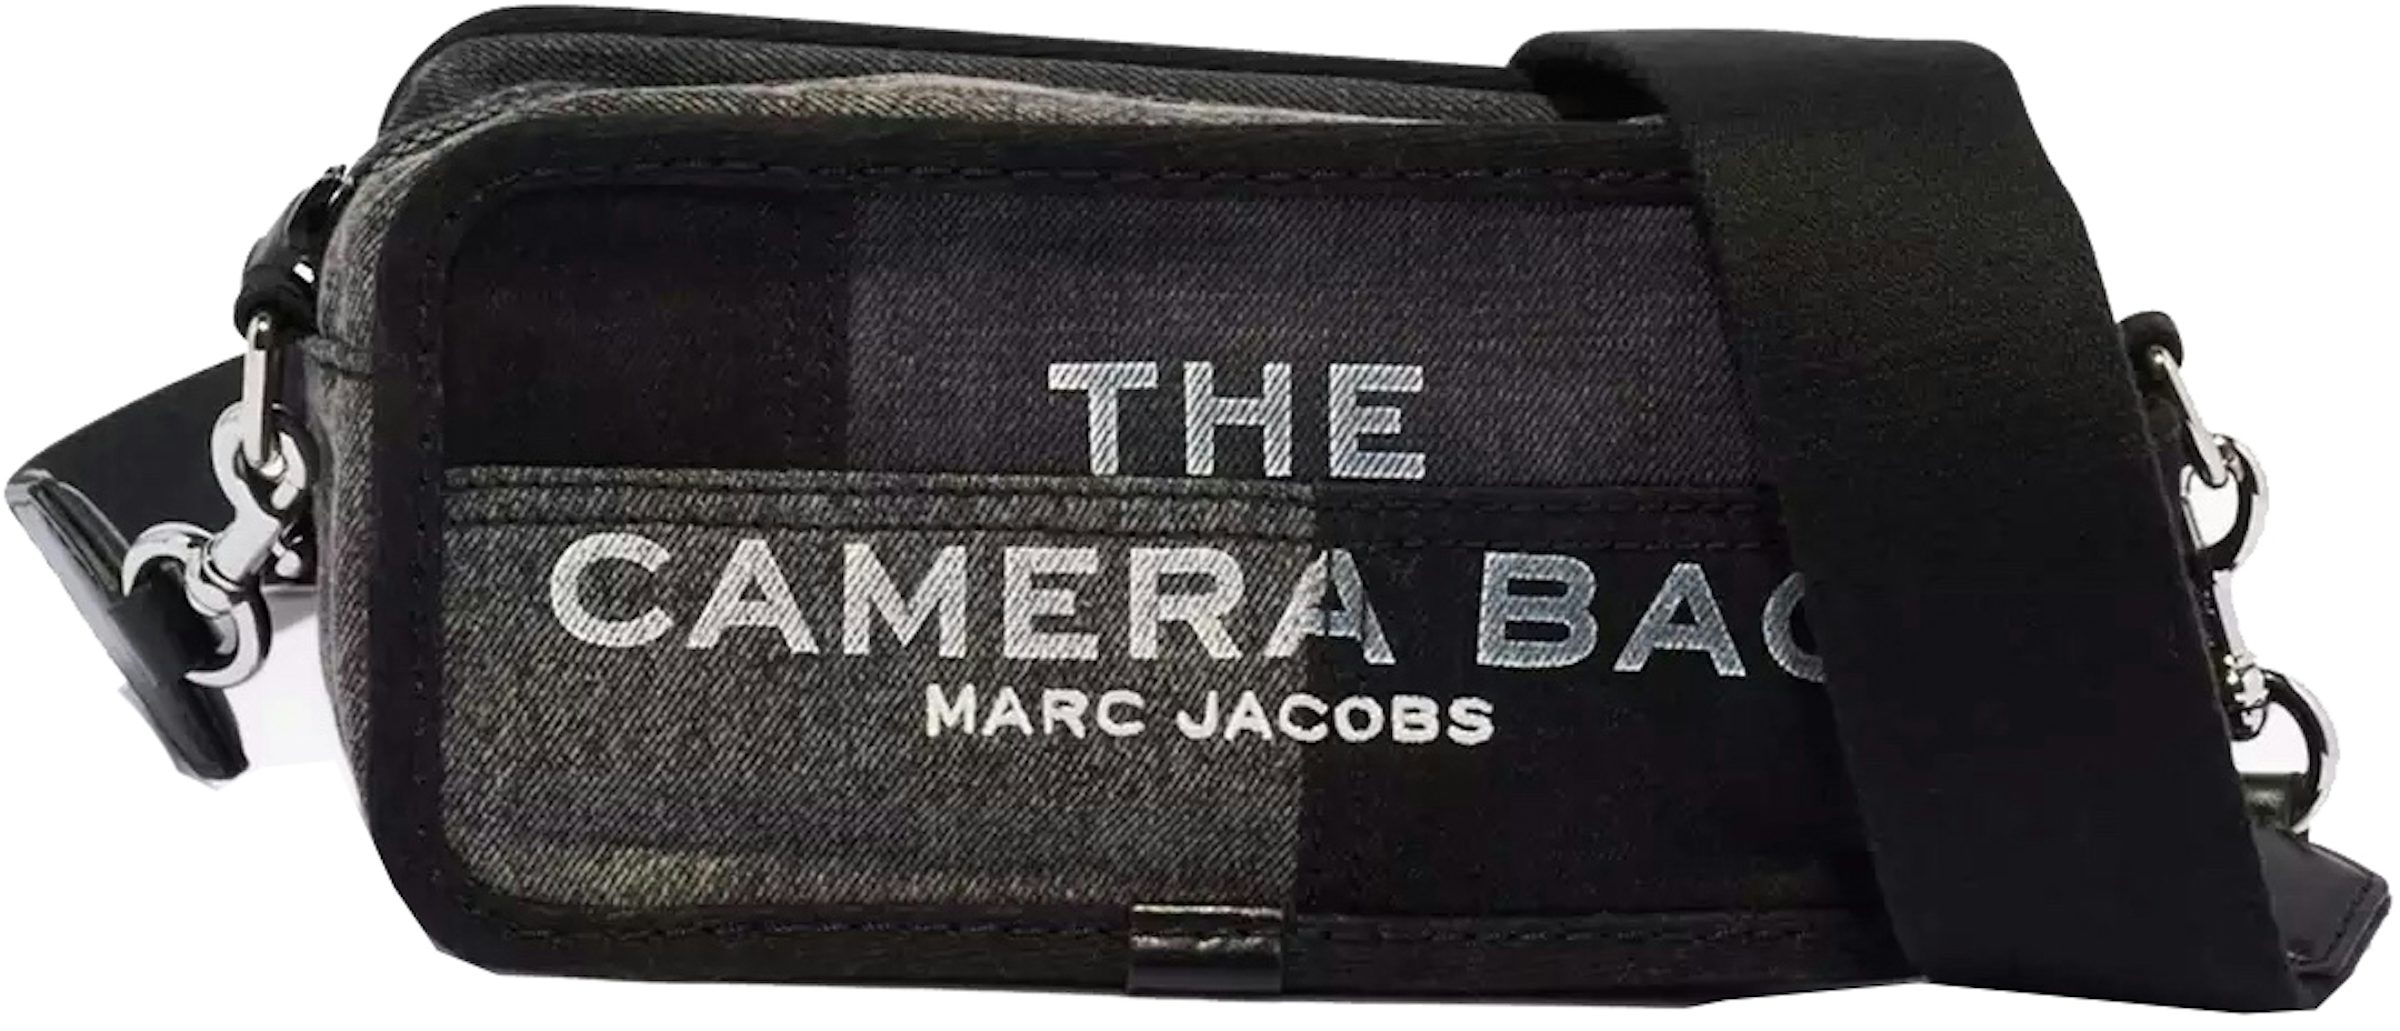  Marc Jacobs Women's Snapshot Camera Bag, Black/Honey